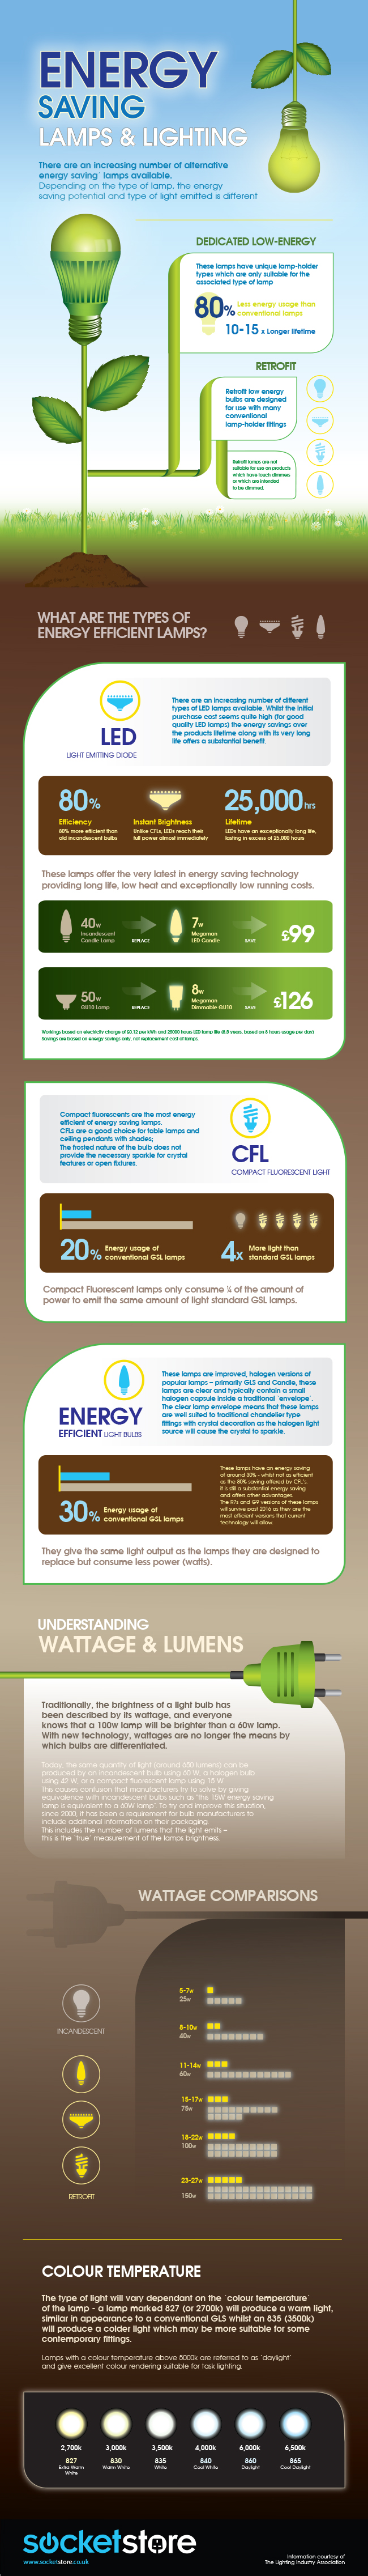 Energy saving lighting infographic